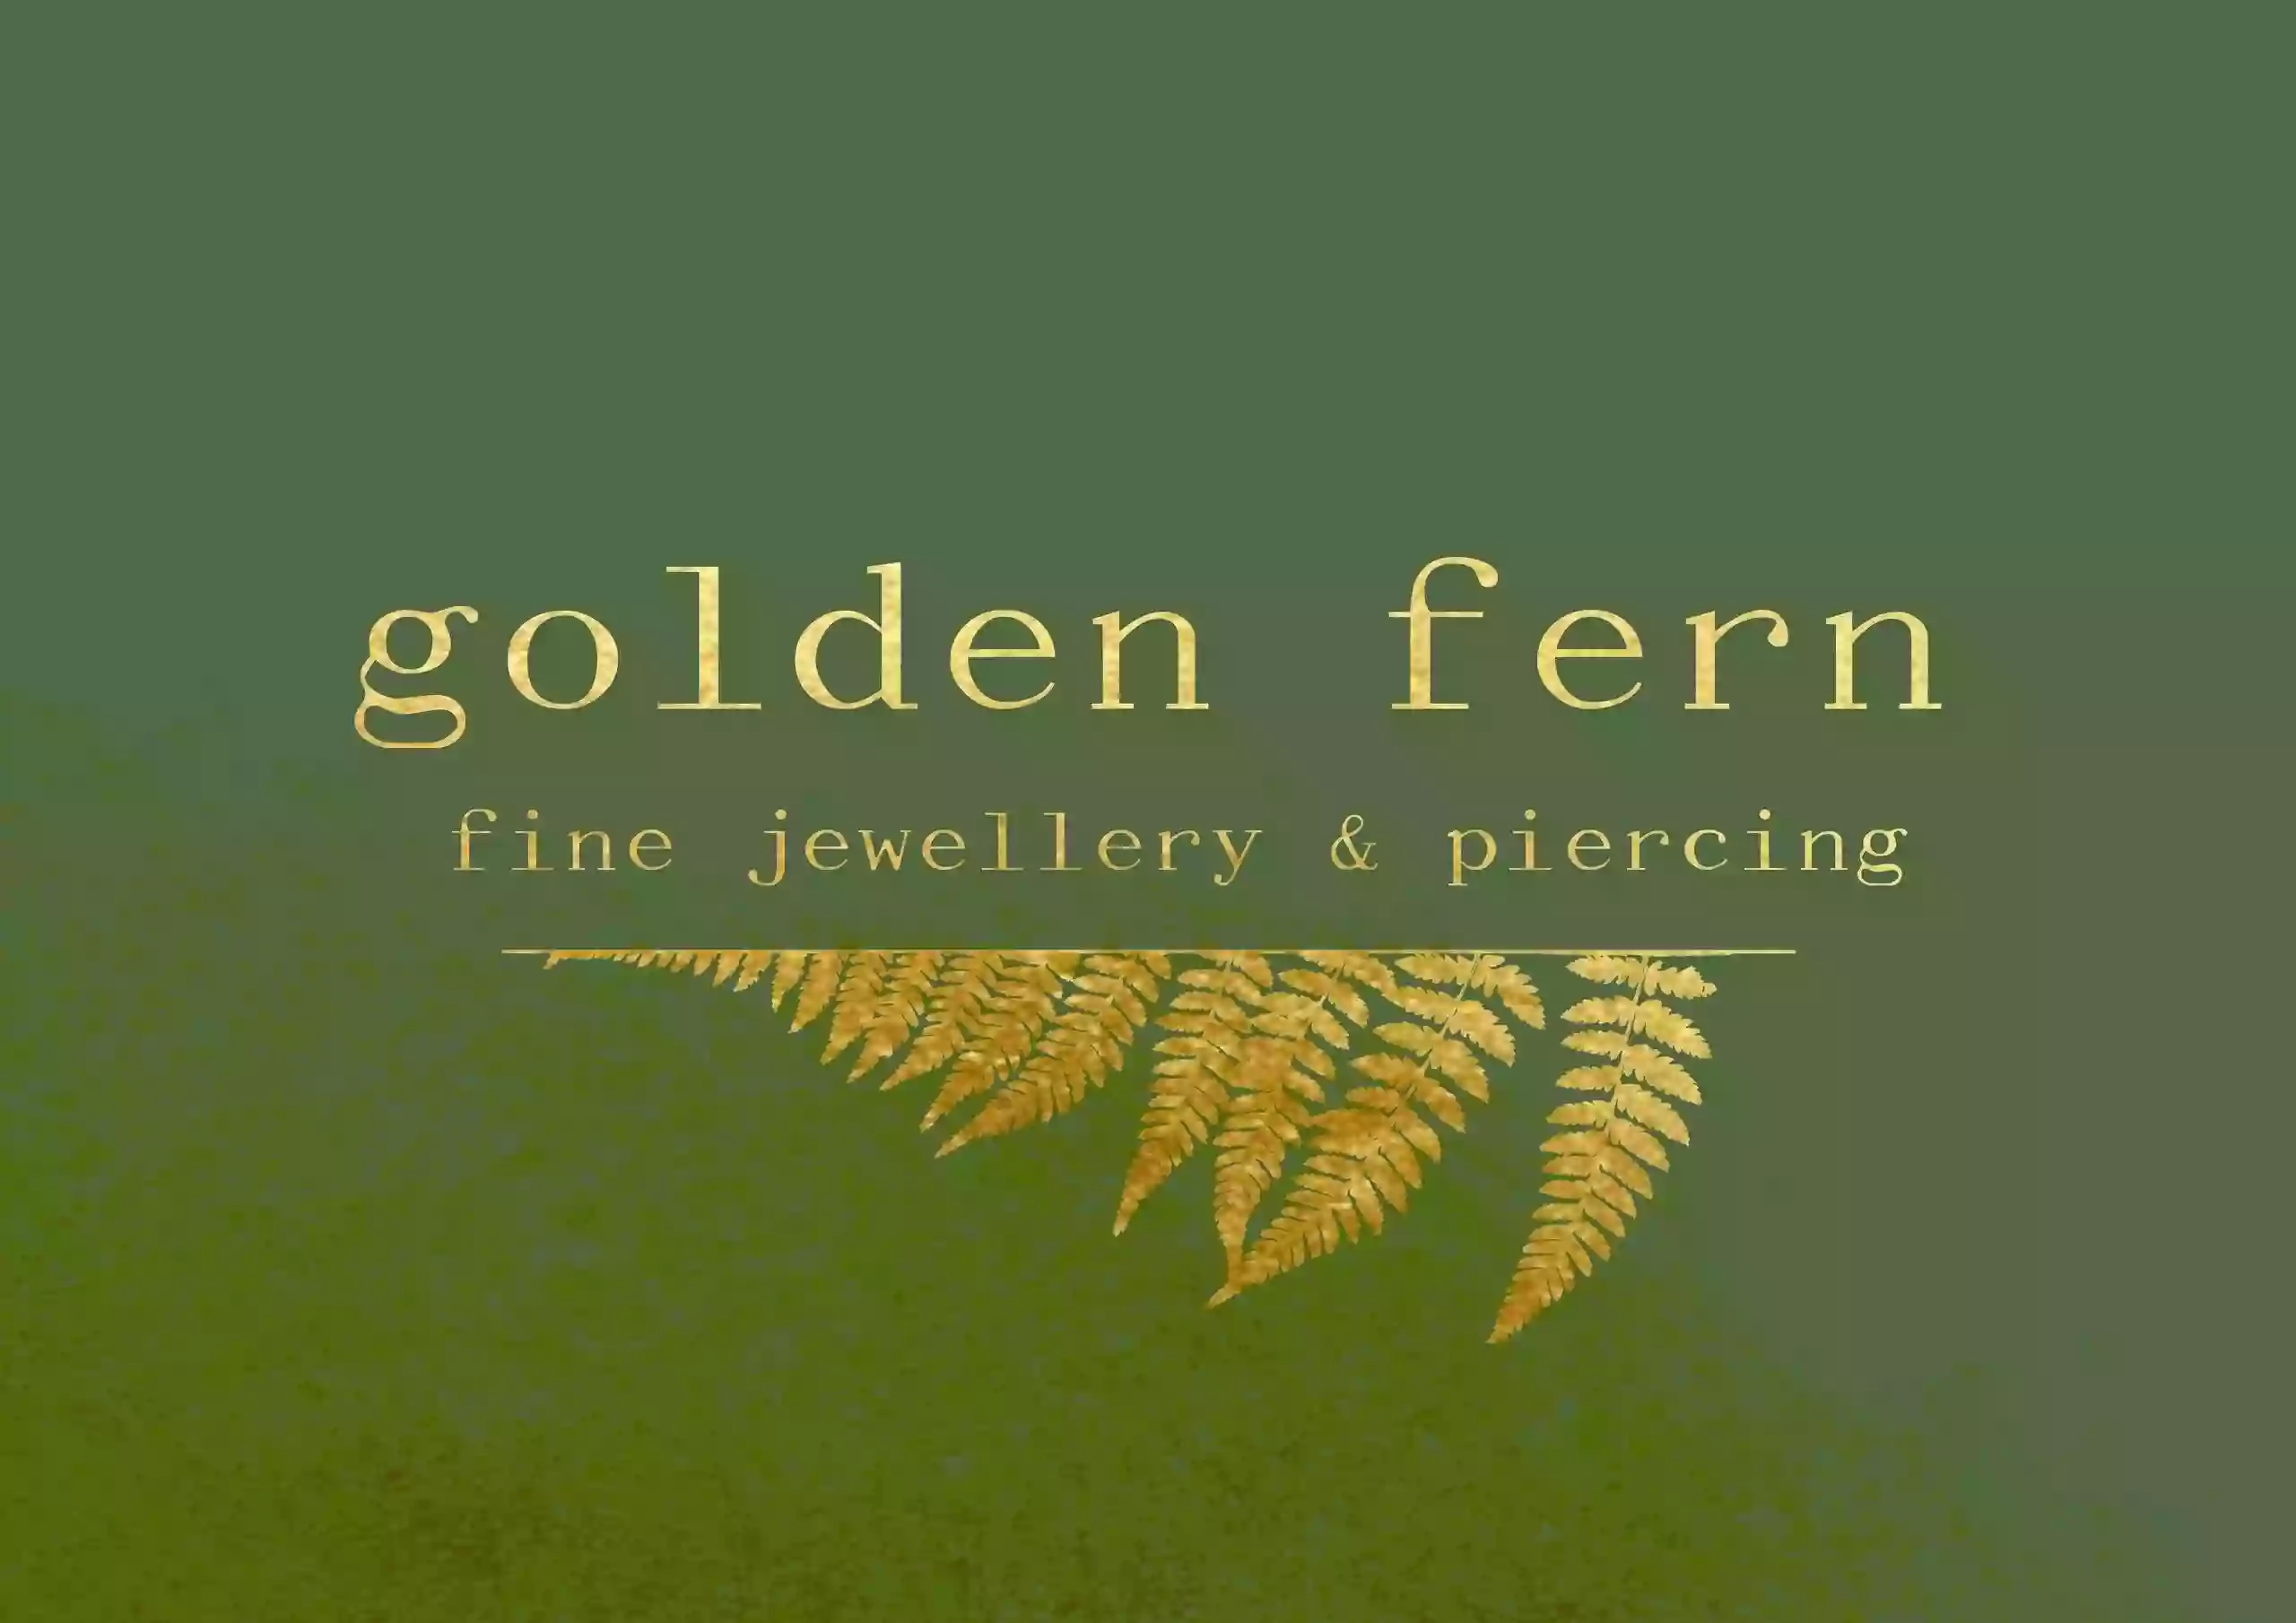 Golden Fern Piercing